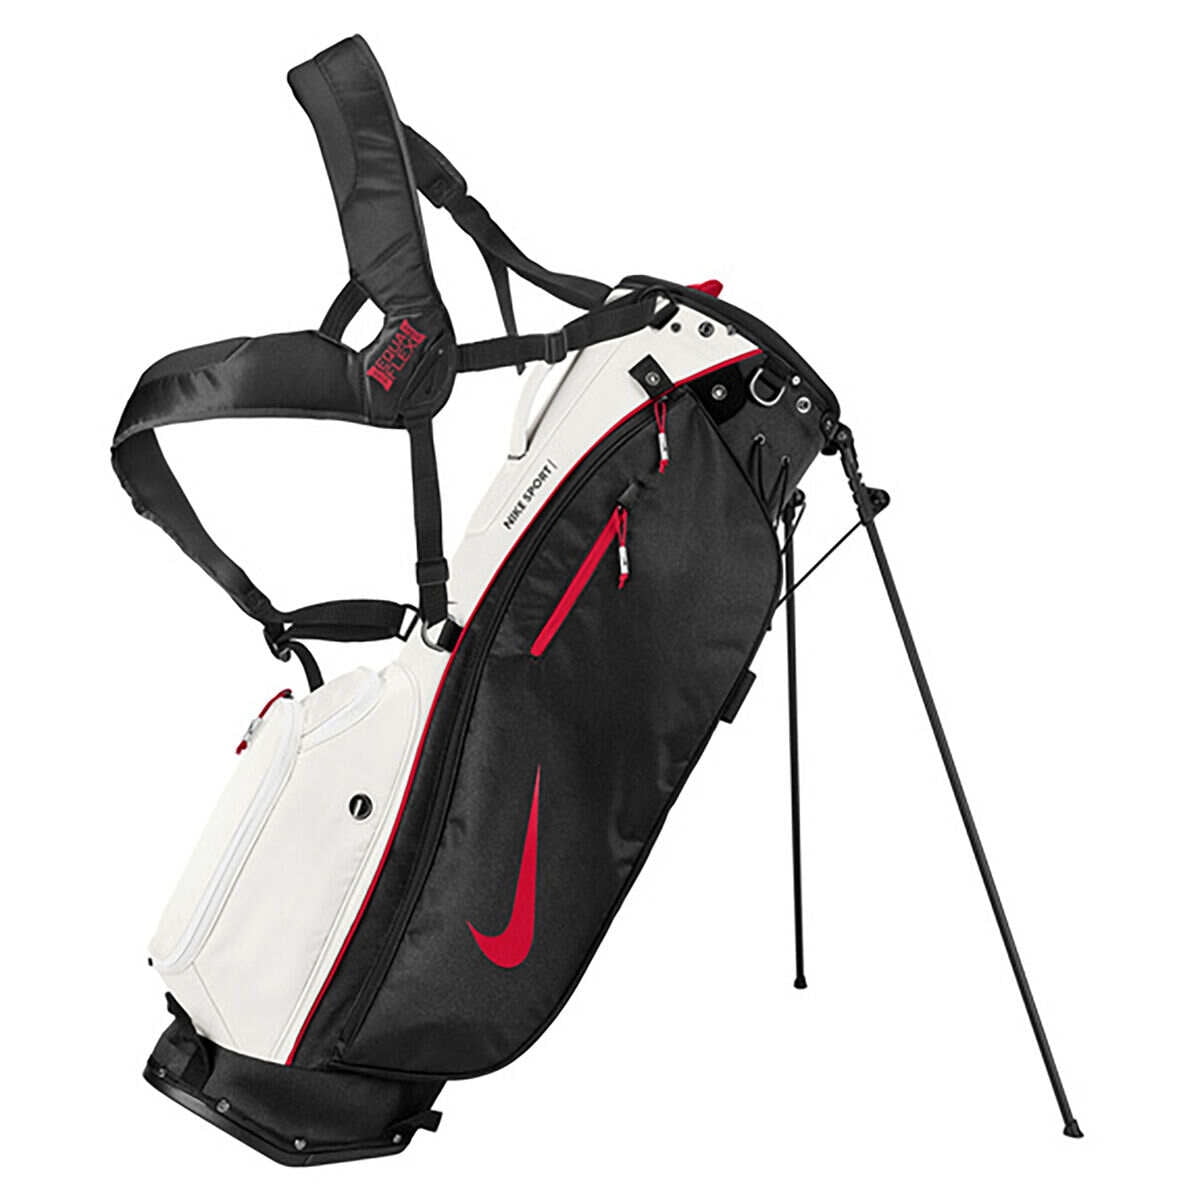 Dempsey Sensitive Pigment Nike Sport Lite Stand Golf Club Bag, Black, Red, White - Walmart.com